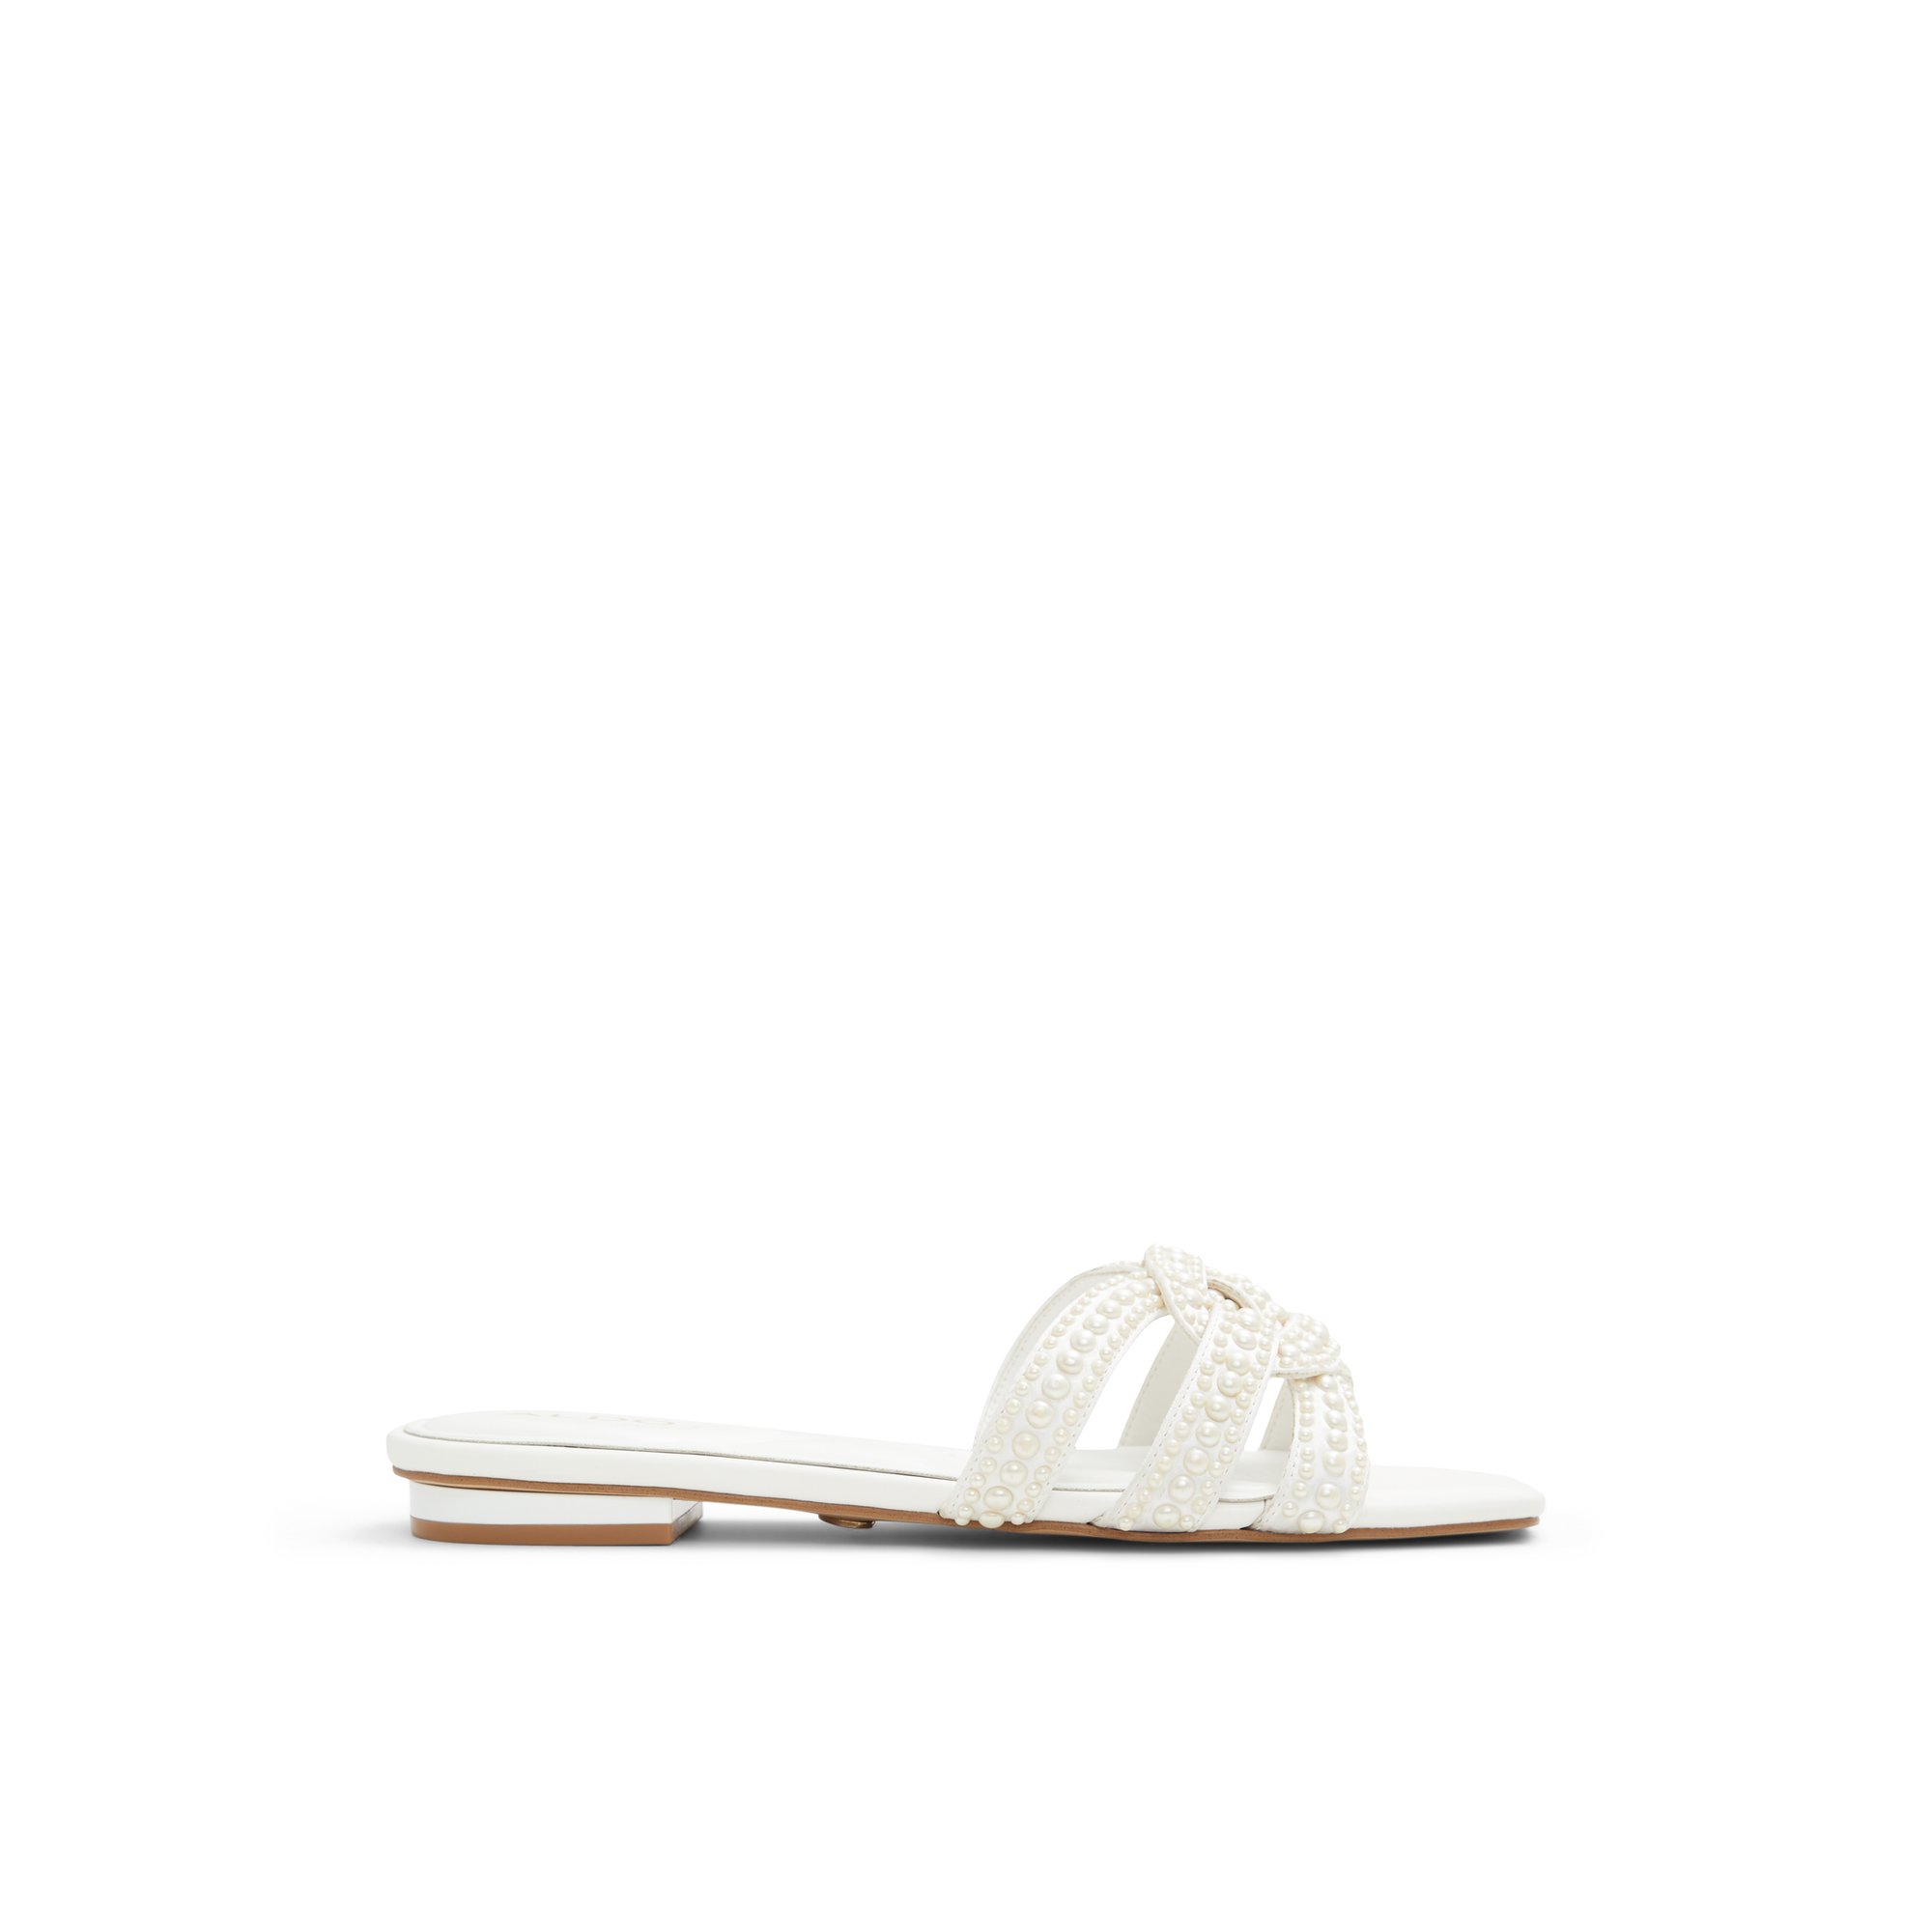 ALDO Lilu - Women's Flat Sandals - White